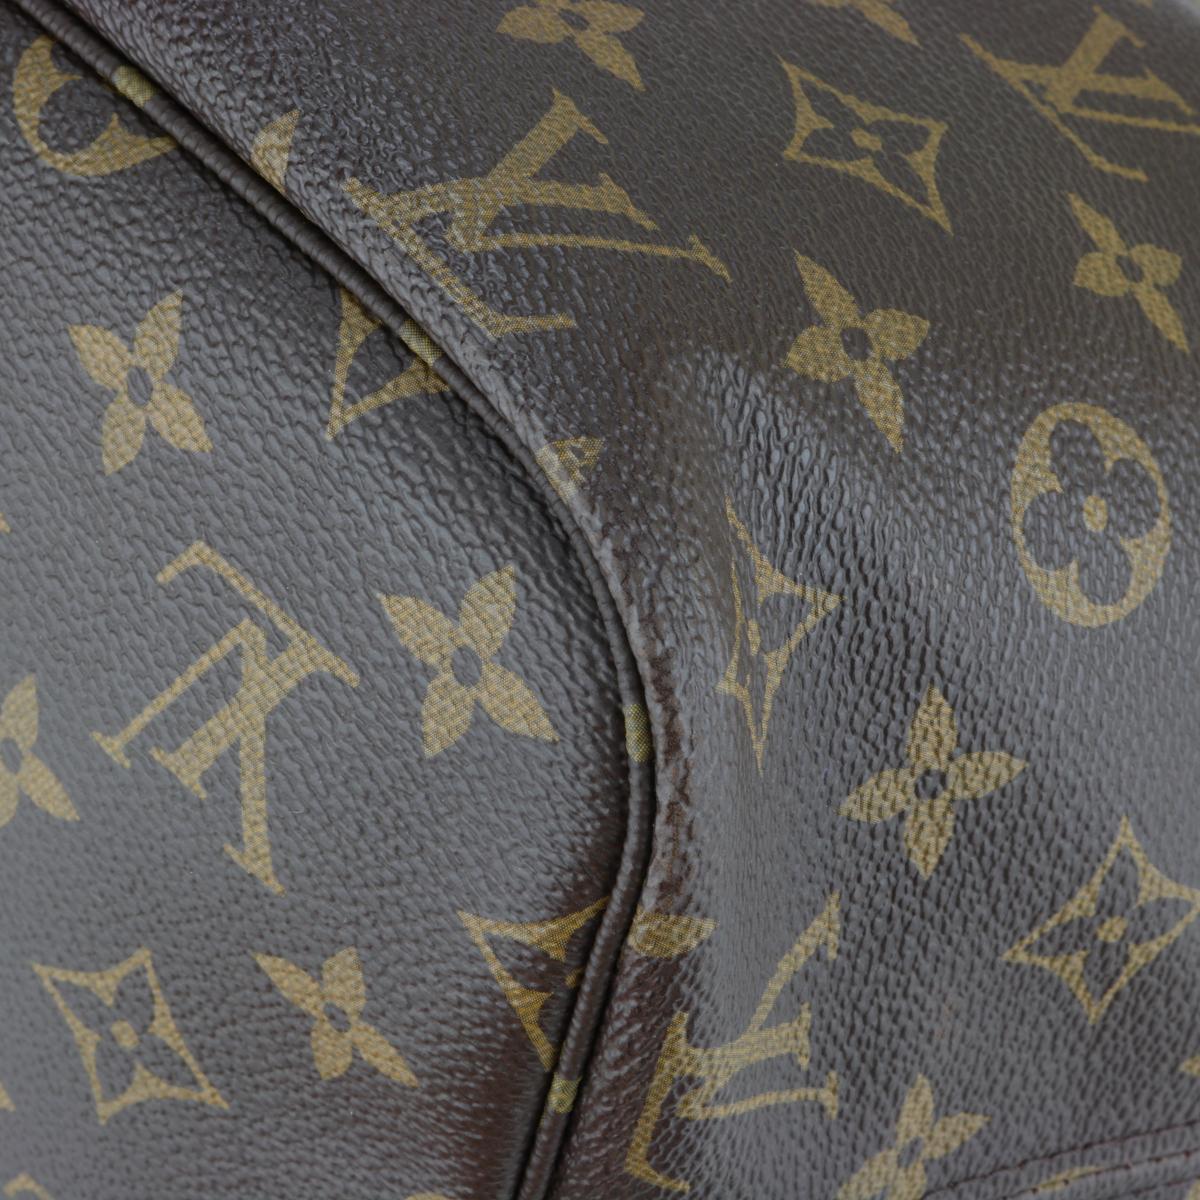 Louis Vuitton Neverfull MM Bag in Monogram with Pivoine Interior 2019 7